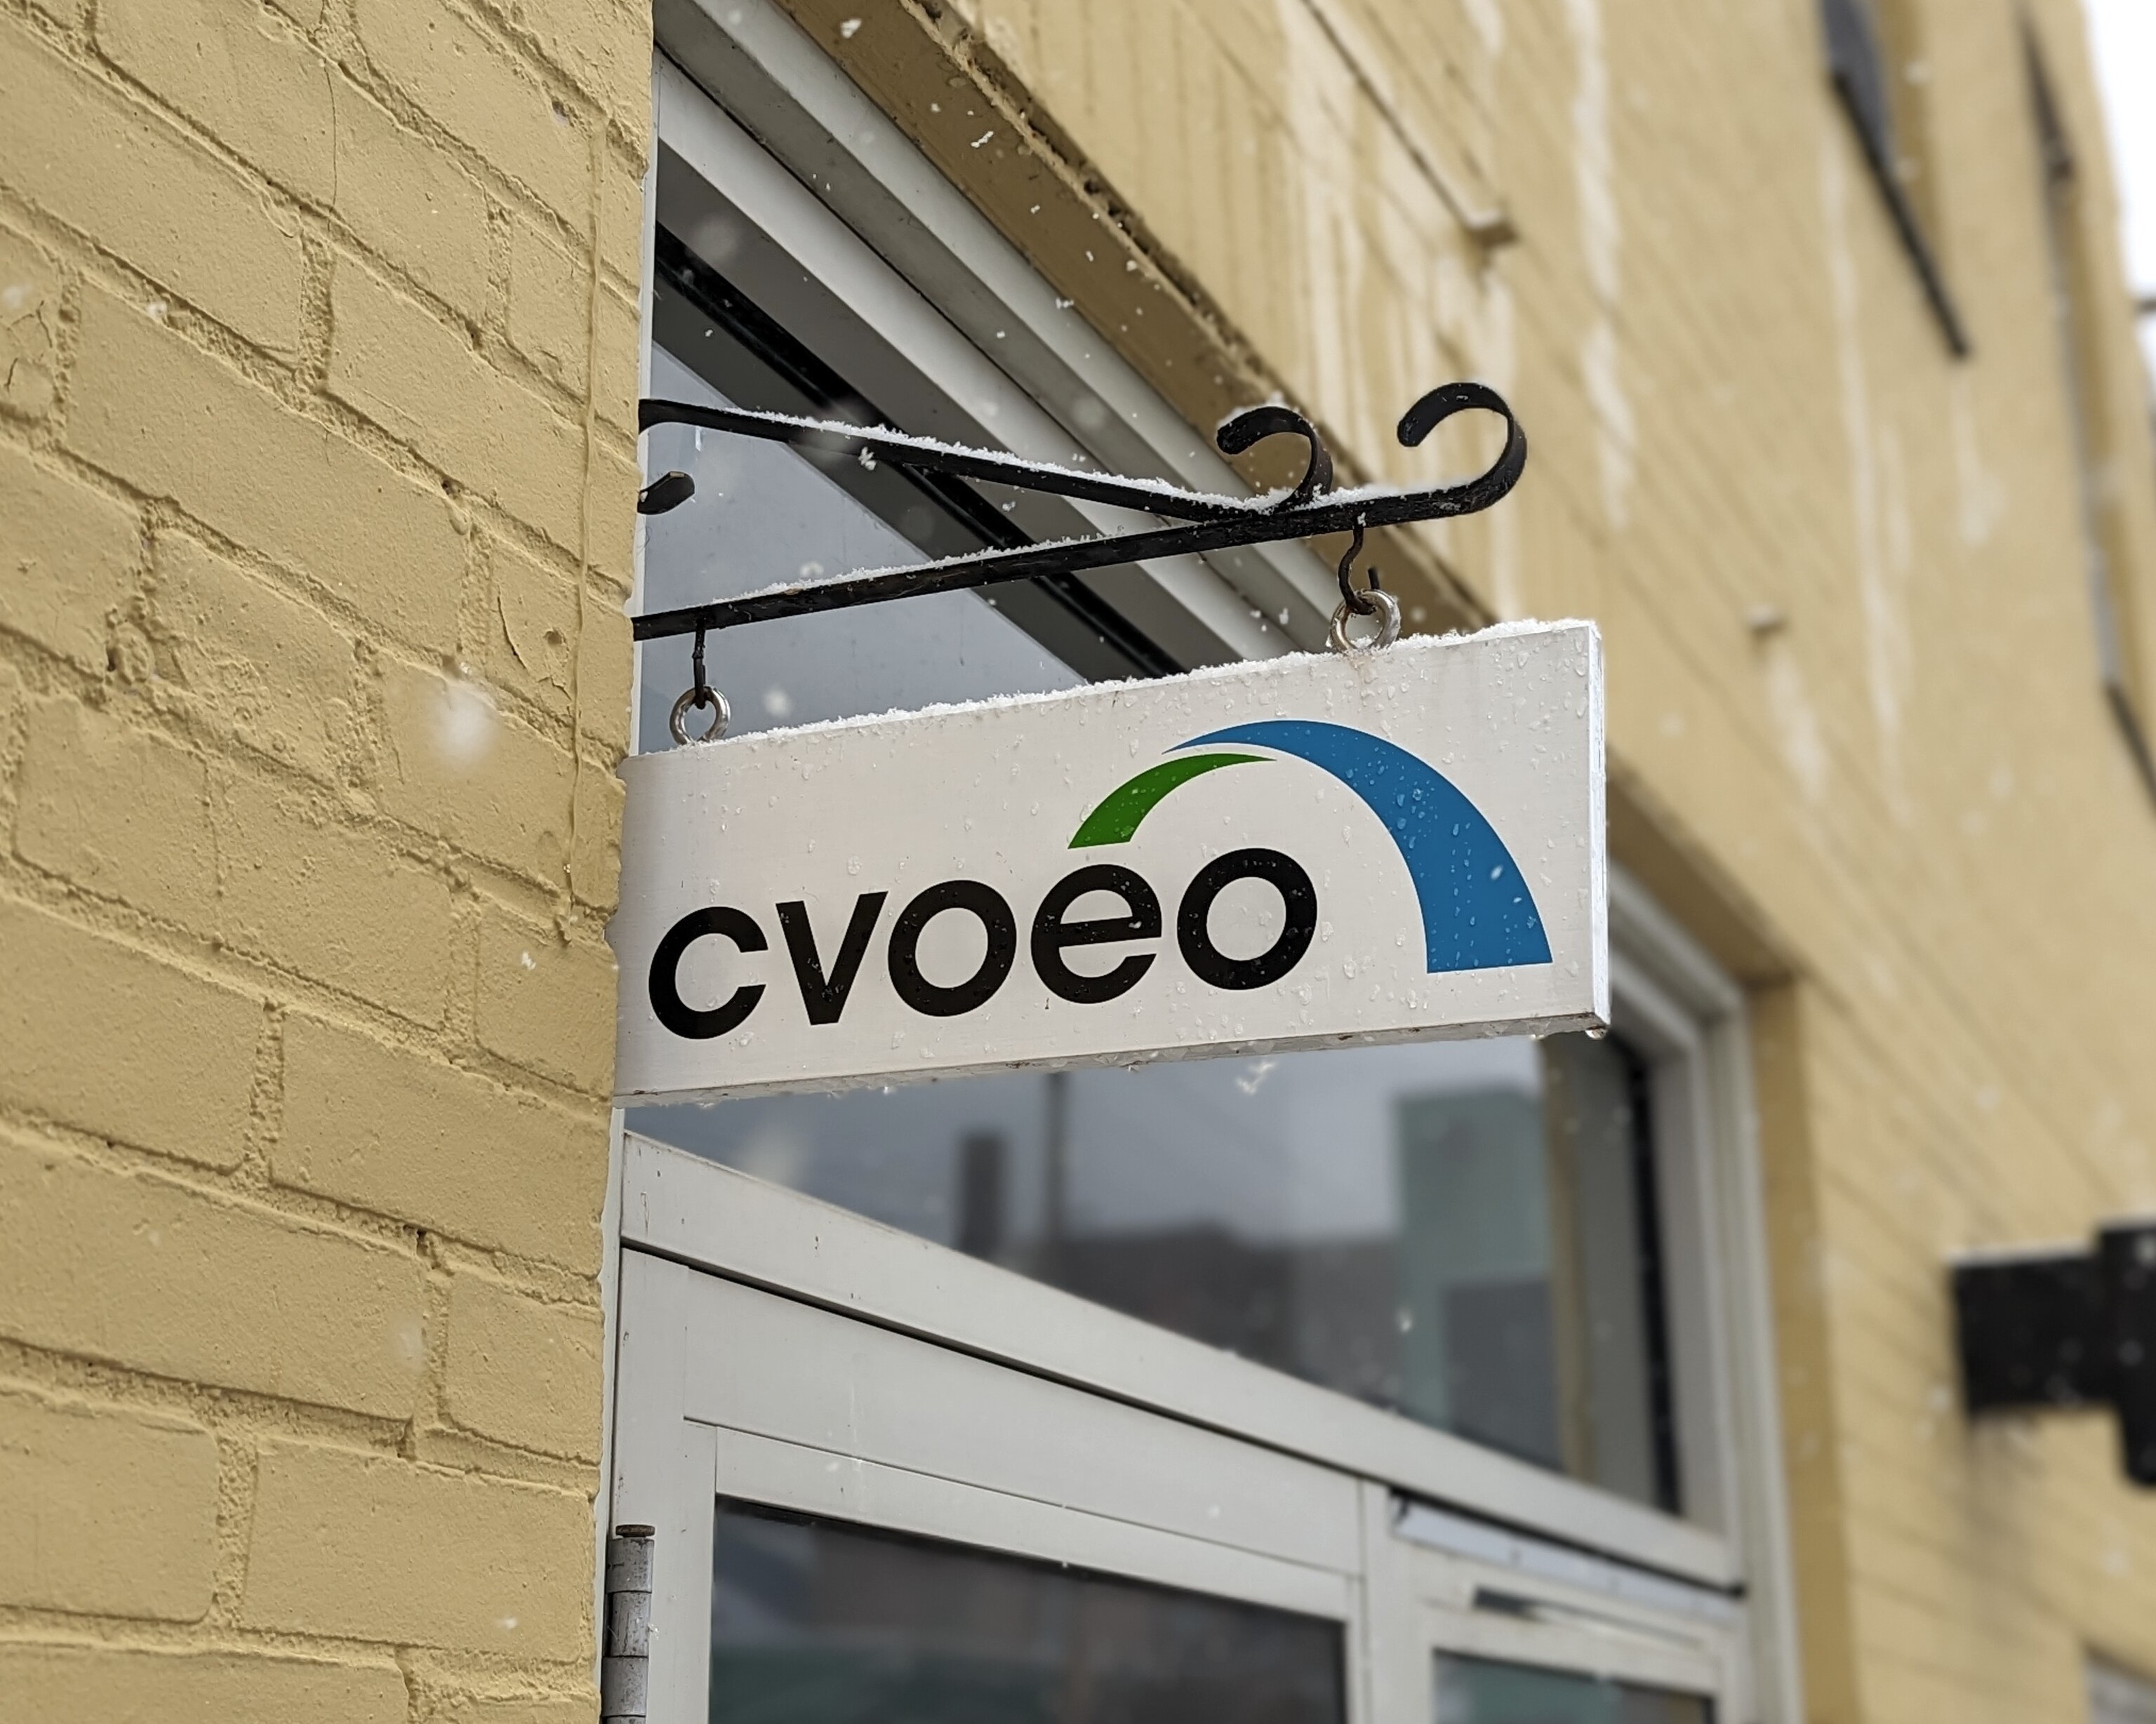 CVOEO sign in winter